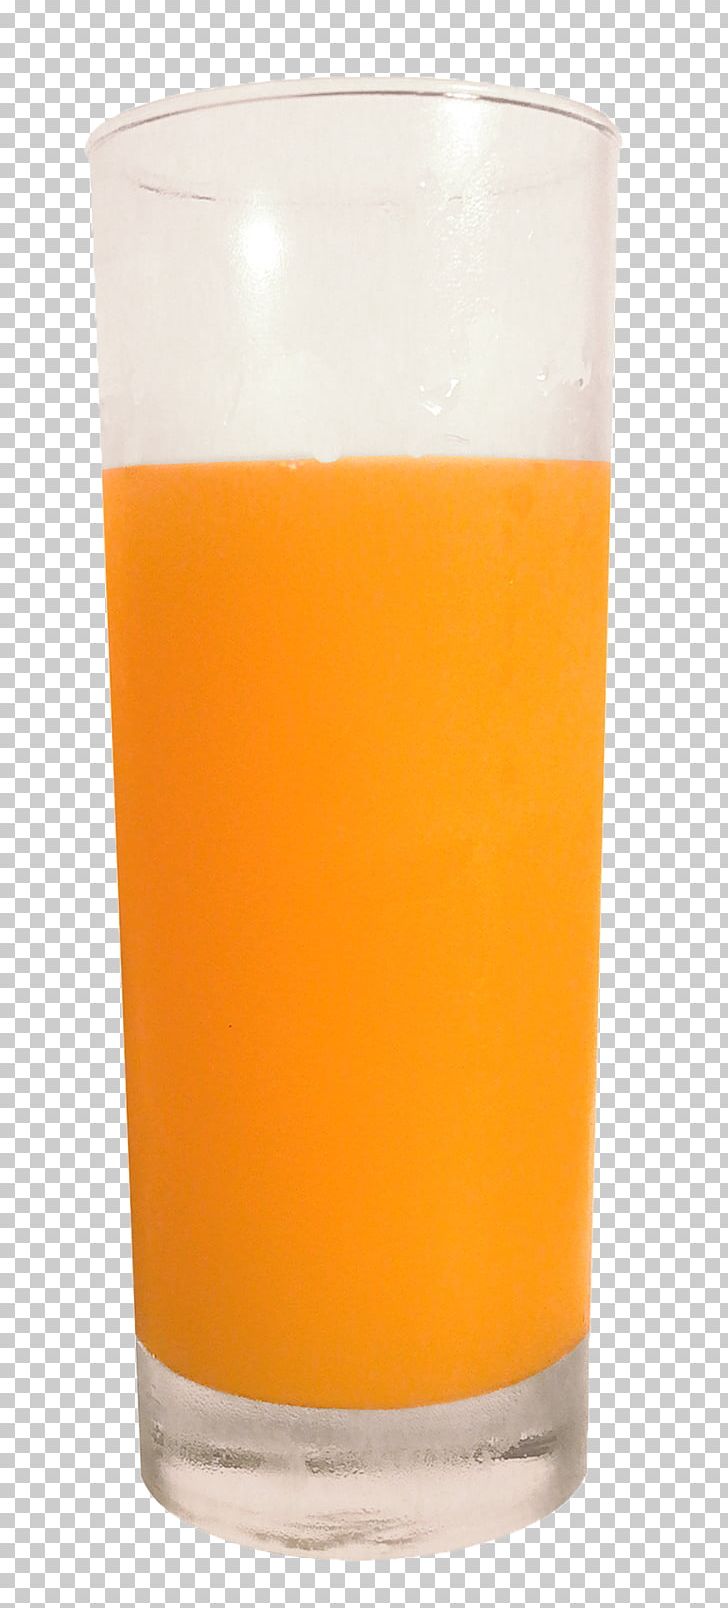 Orange Juice Tomato Juice Soft Drink Harvey Wallbanger PNG, Clipart, Beer Glass, Broken Glass, Coke, Drink, Drinks Free PNG Download